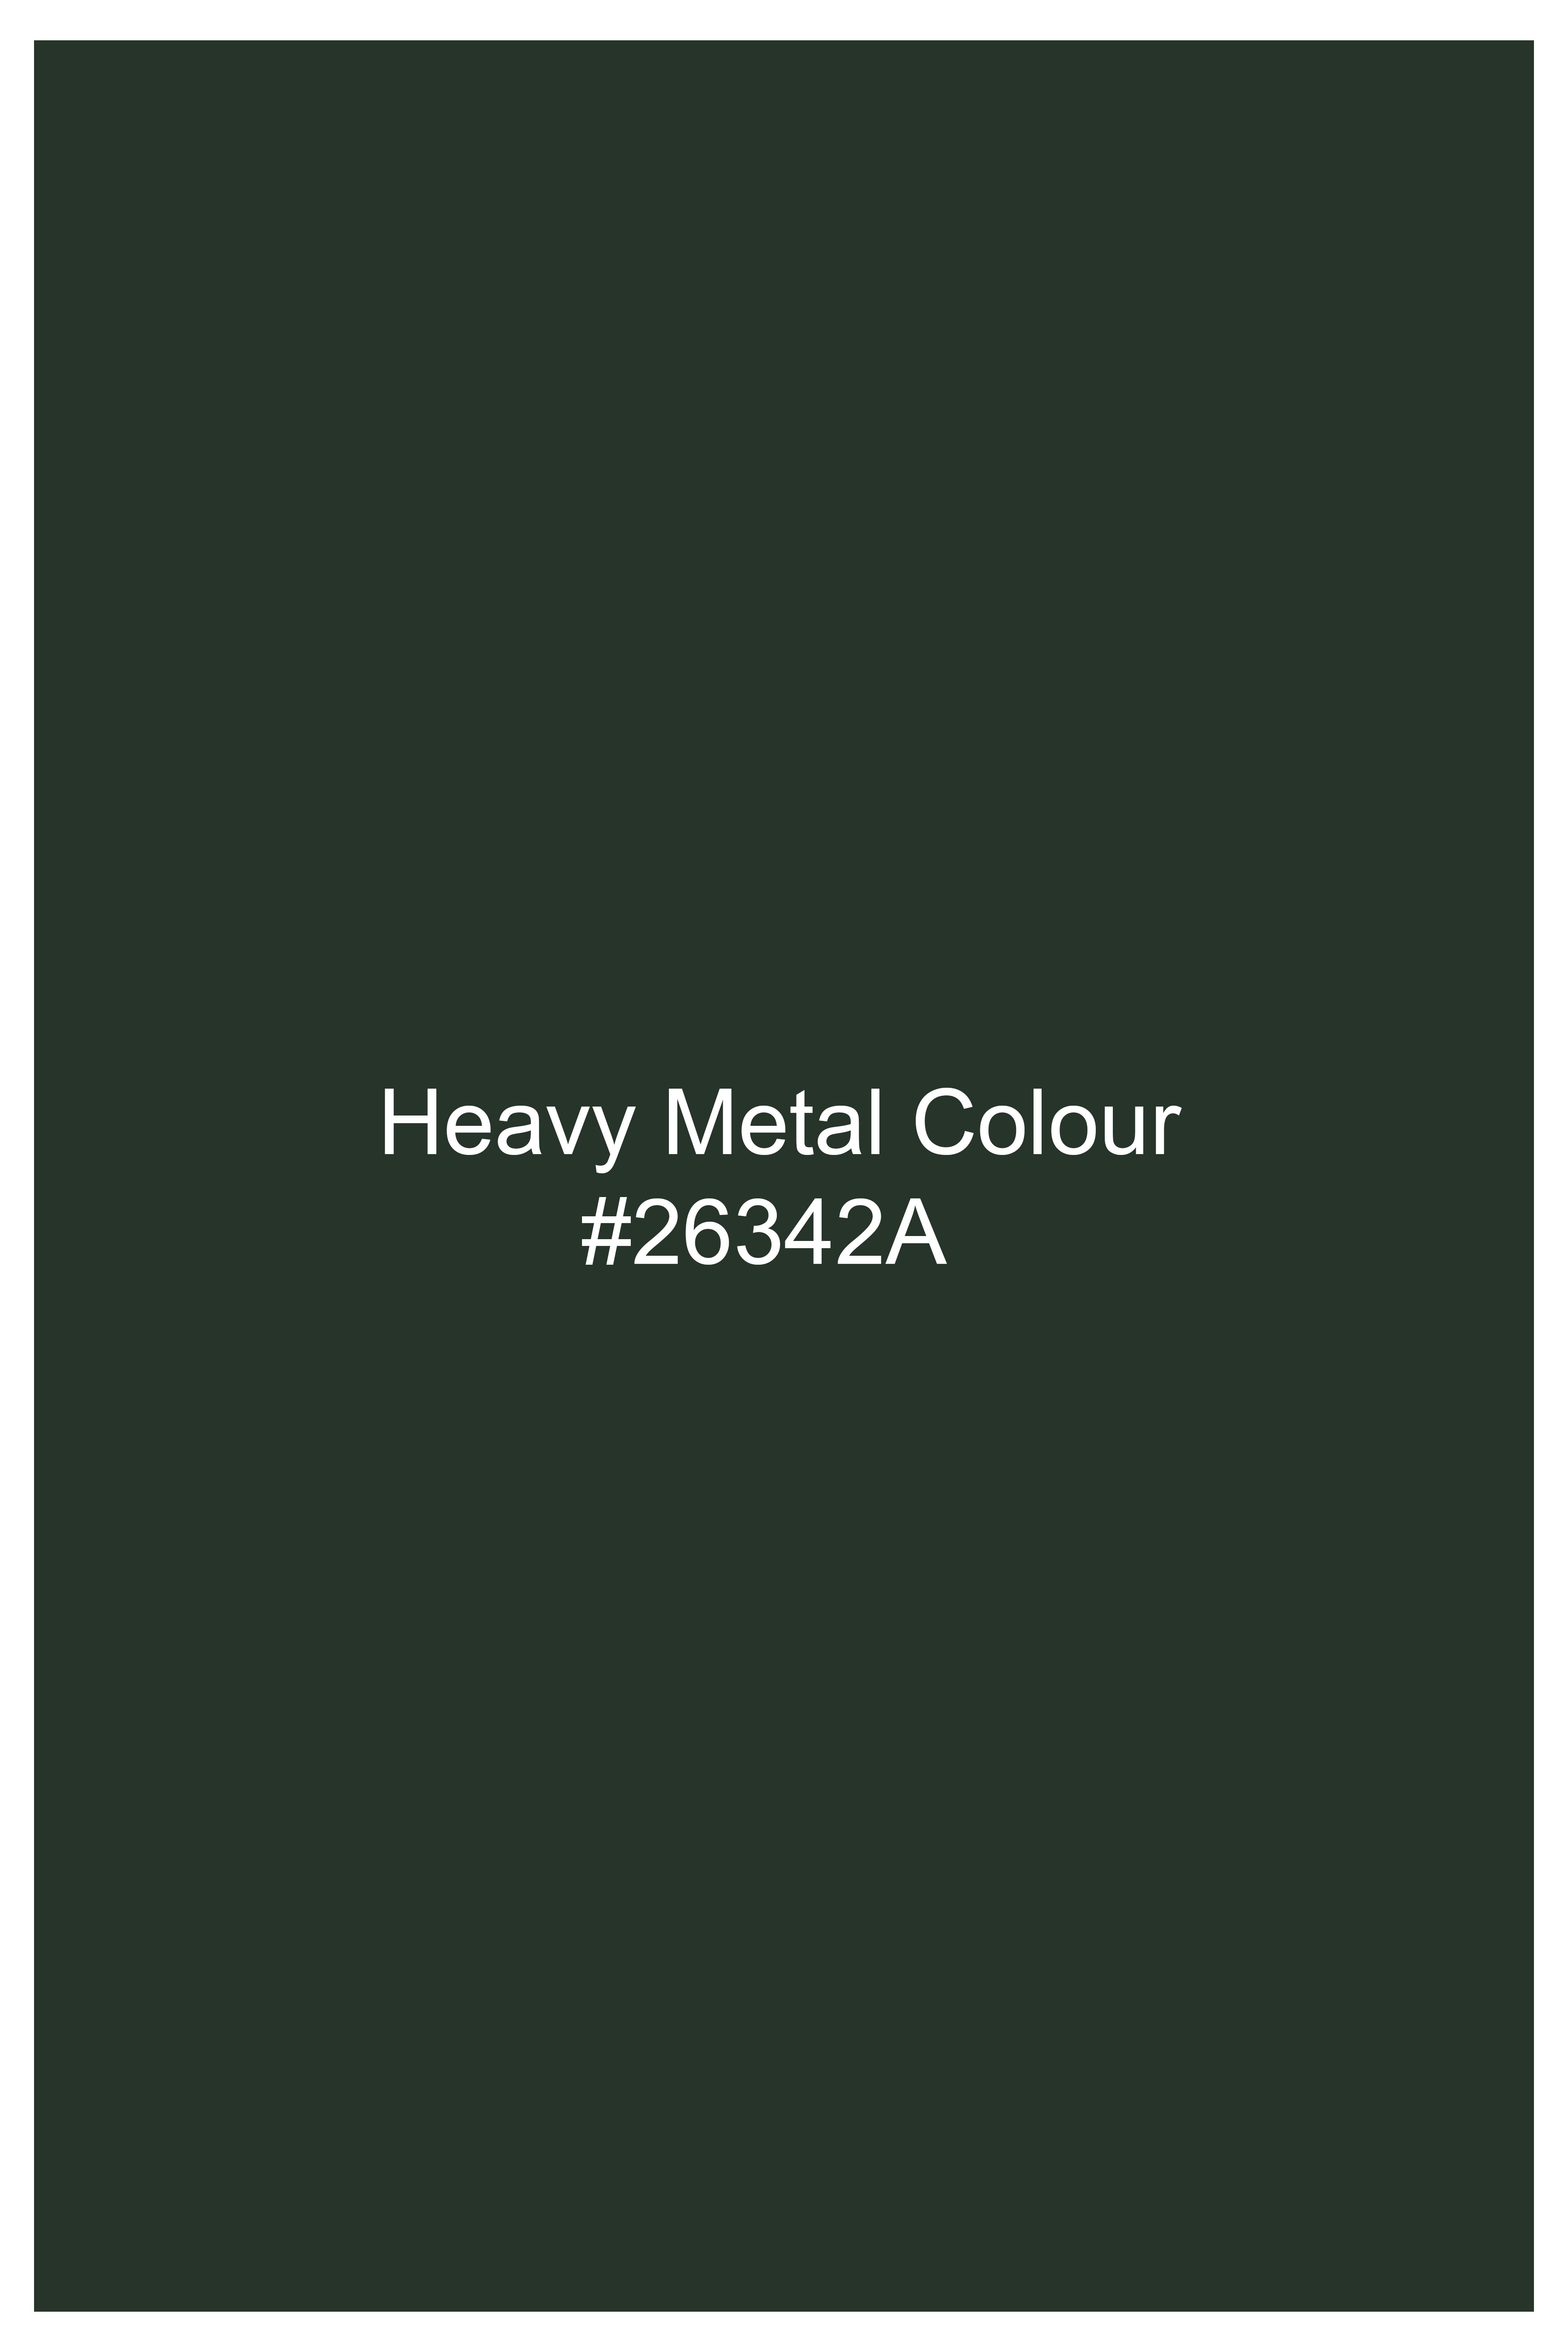 Heavy Metal Green Premium Cotton Tuxedo Stretchable Traveler Suit ST2775-BKL-36,ST2775-BKL-38,ST2775-BKL-40,ST2775-BKL-42,ST2775-BKL-44,ST2775-BKL-46,ST2775-BKL-48,ST2775-BKL-50,ST2775-BKL-52,ST2775-BKL-54,ST2775-BKL-56,ST2775-BKL-58,ST2775-BKL-60